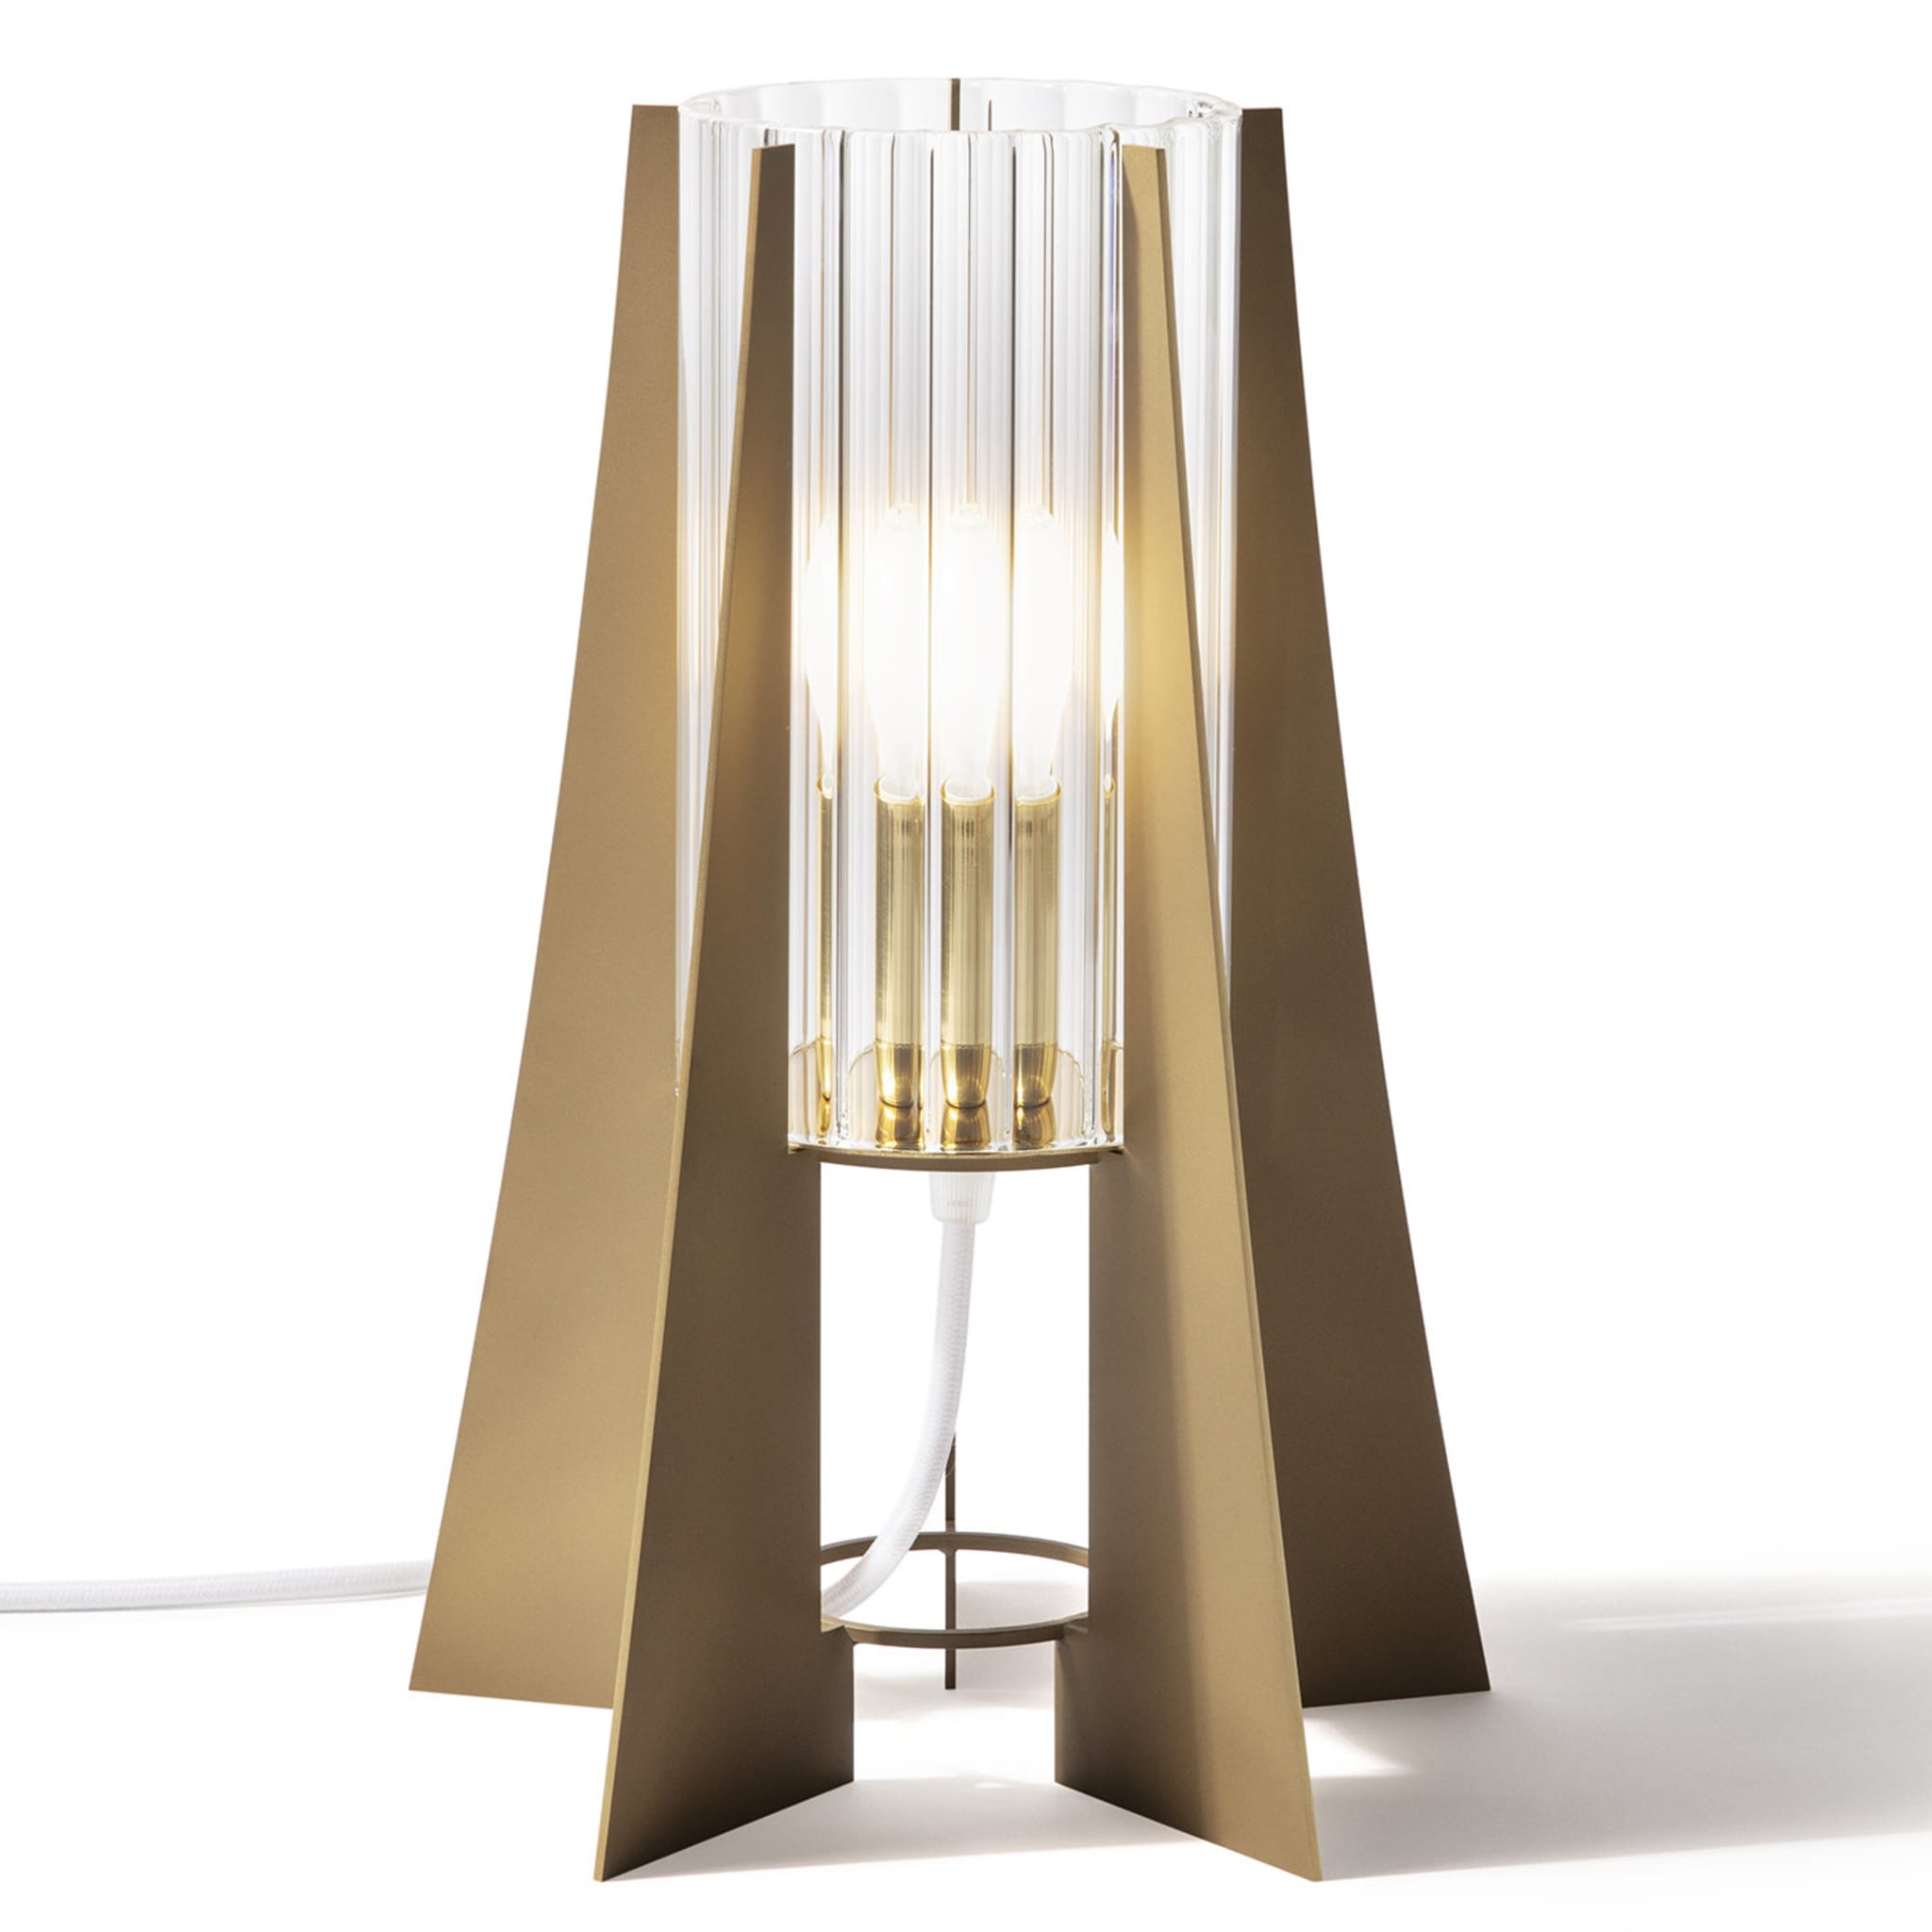 TPLG2 Sandblasted Table Lamp by GoodMorning studio - Alternative view 1